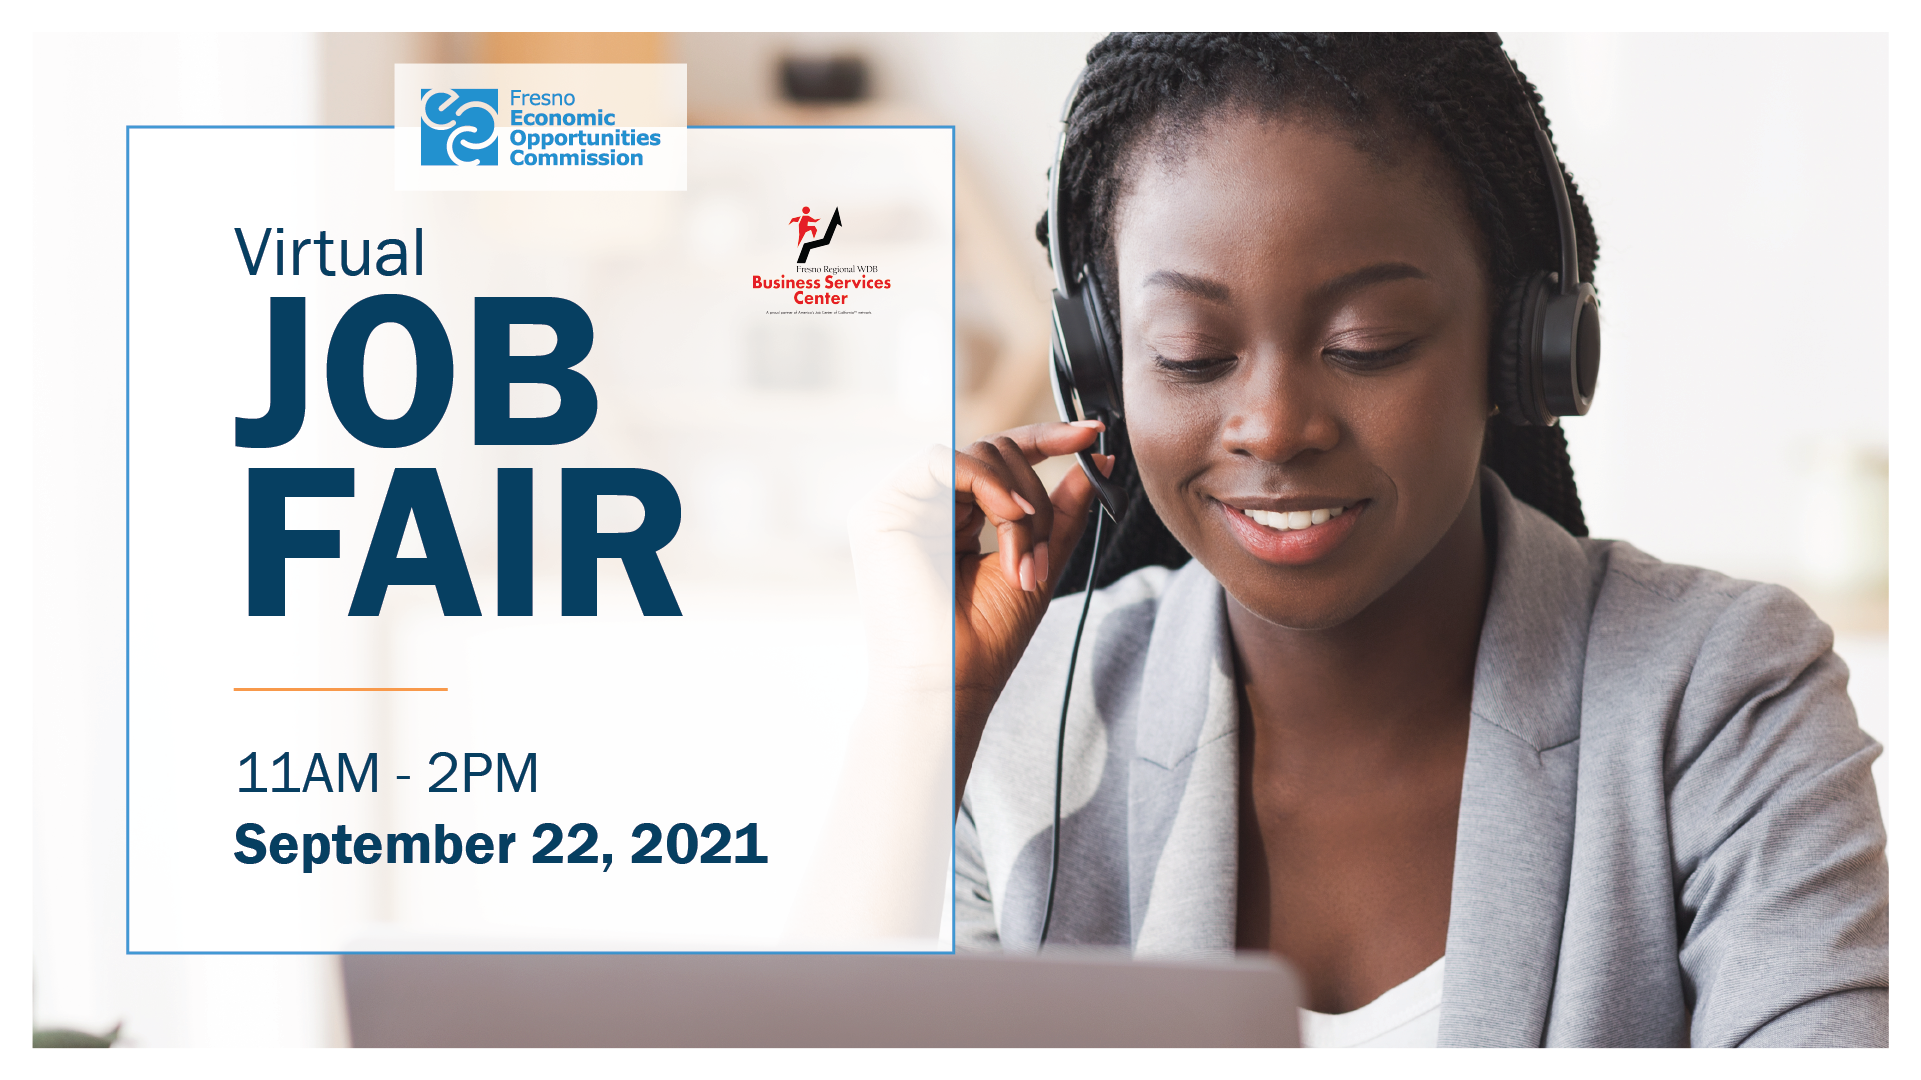 Fresno EOC Virtual Job Fair, Sept 22, 2021